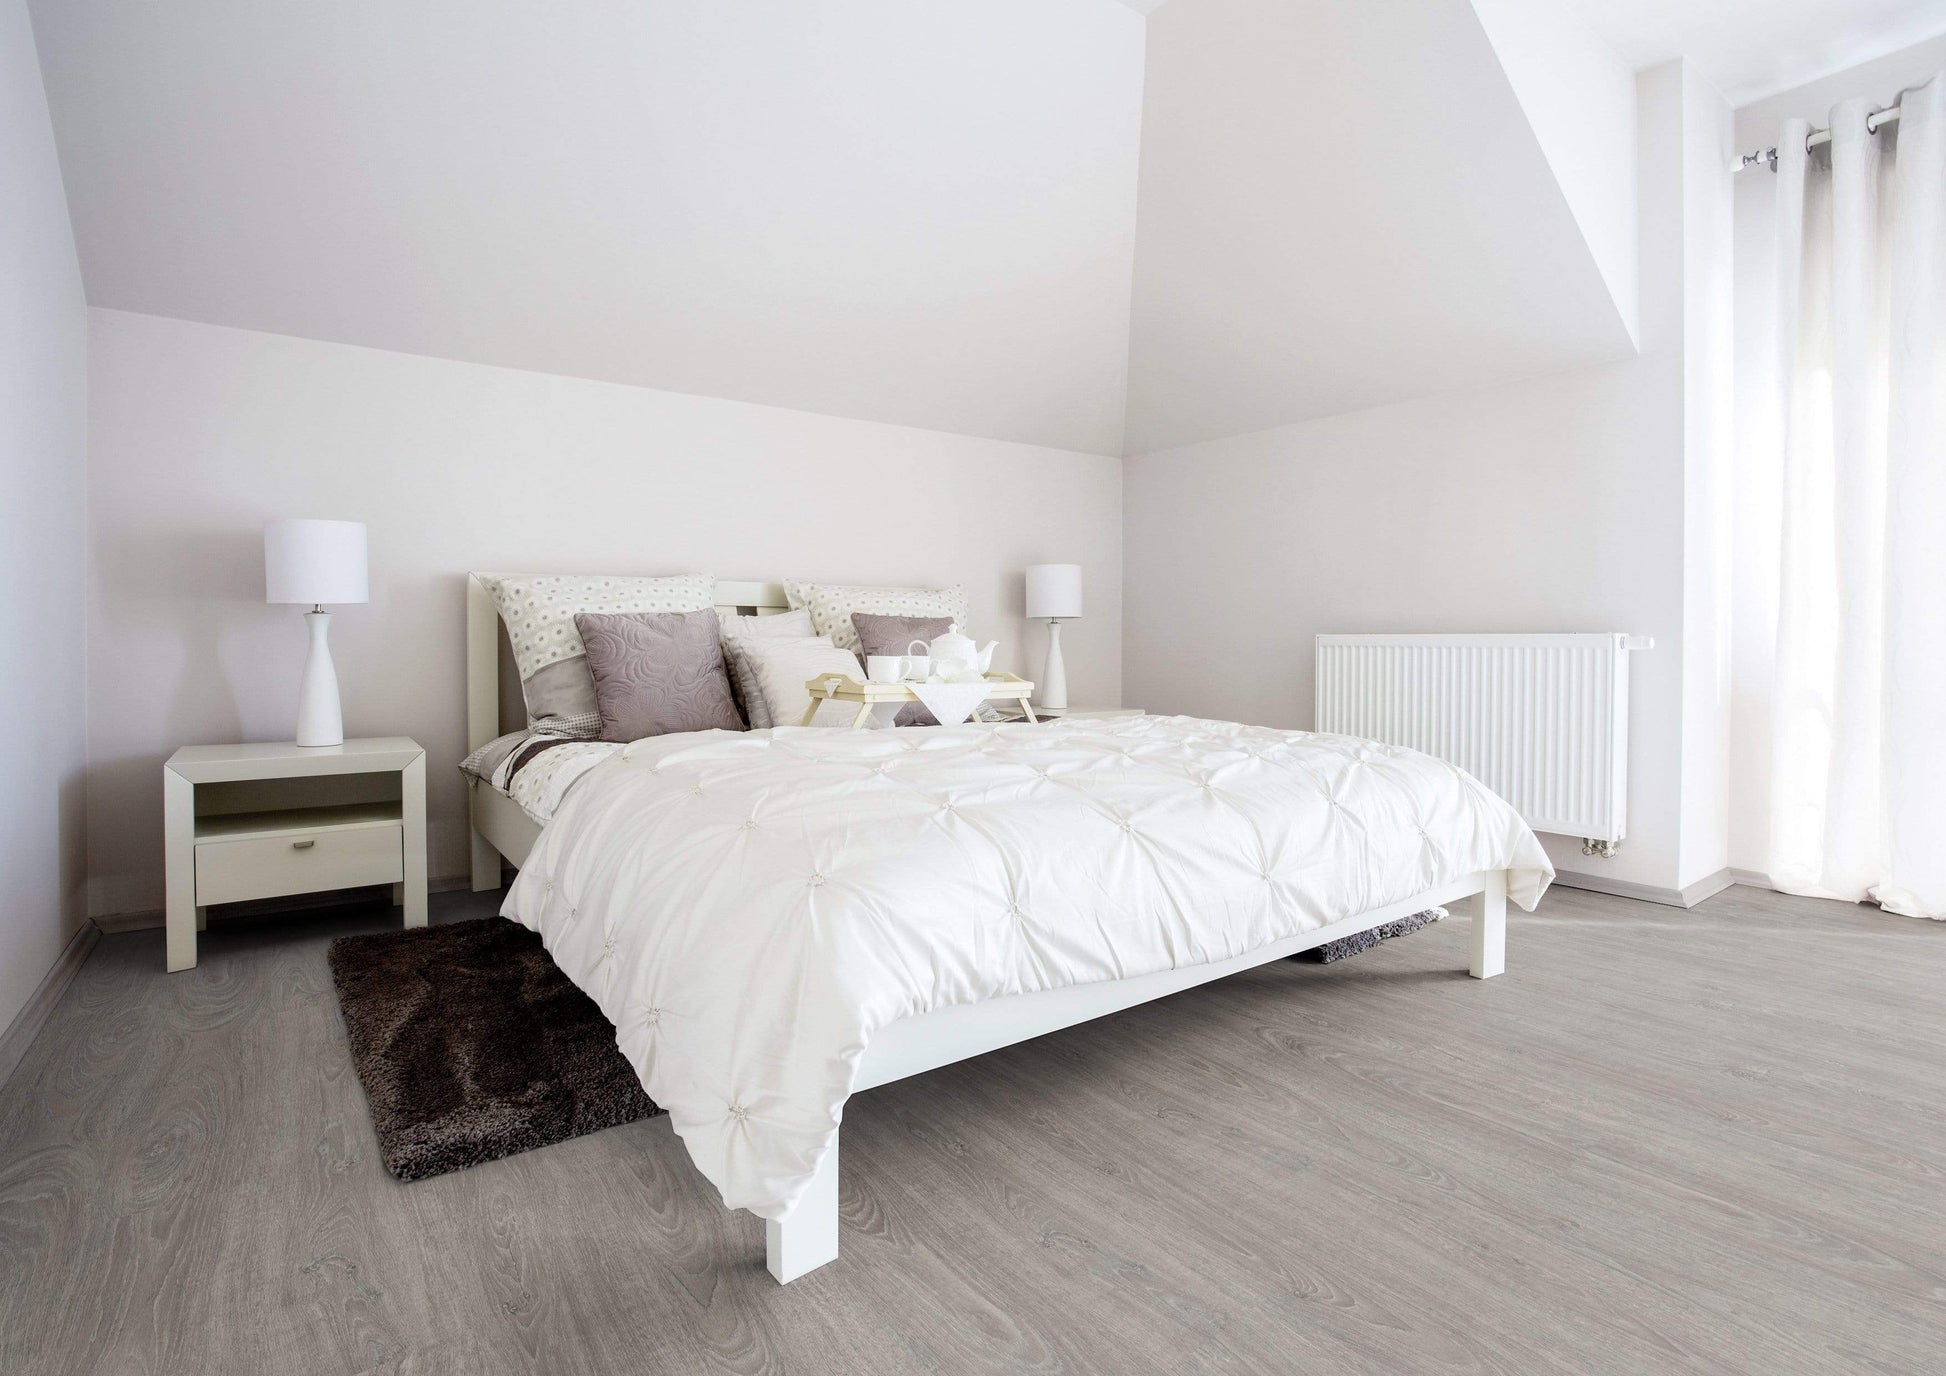 Flooring & Carpet  -  Luvanto Click Wash Grey Oak Flooring 2.2M  -  50155754